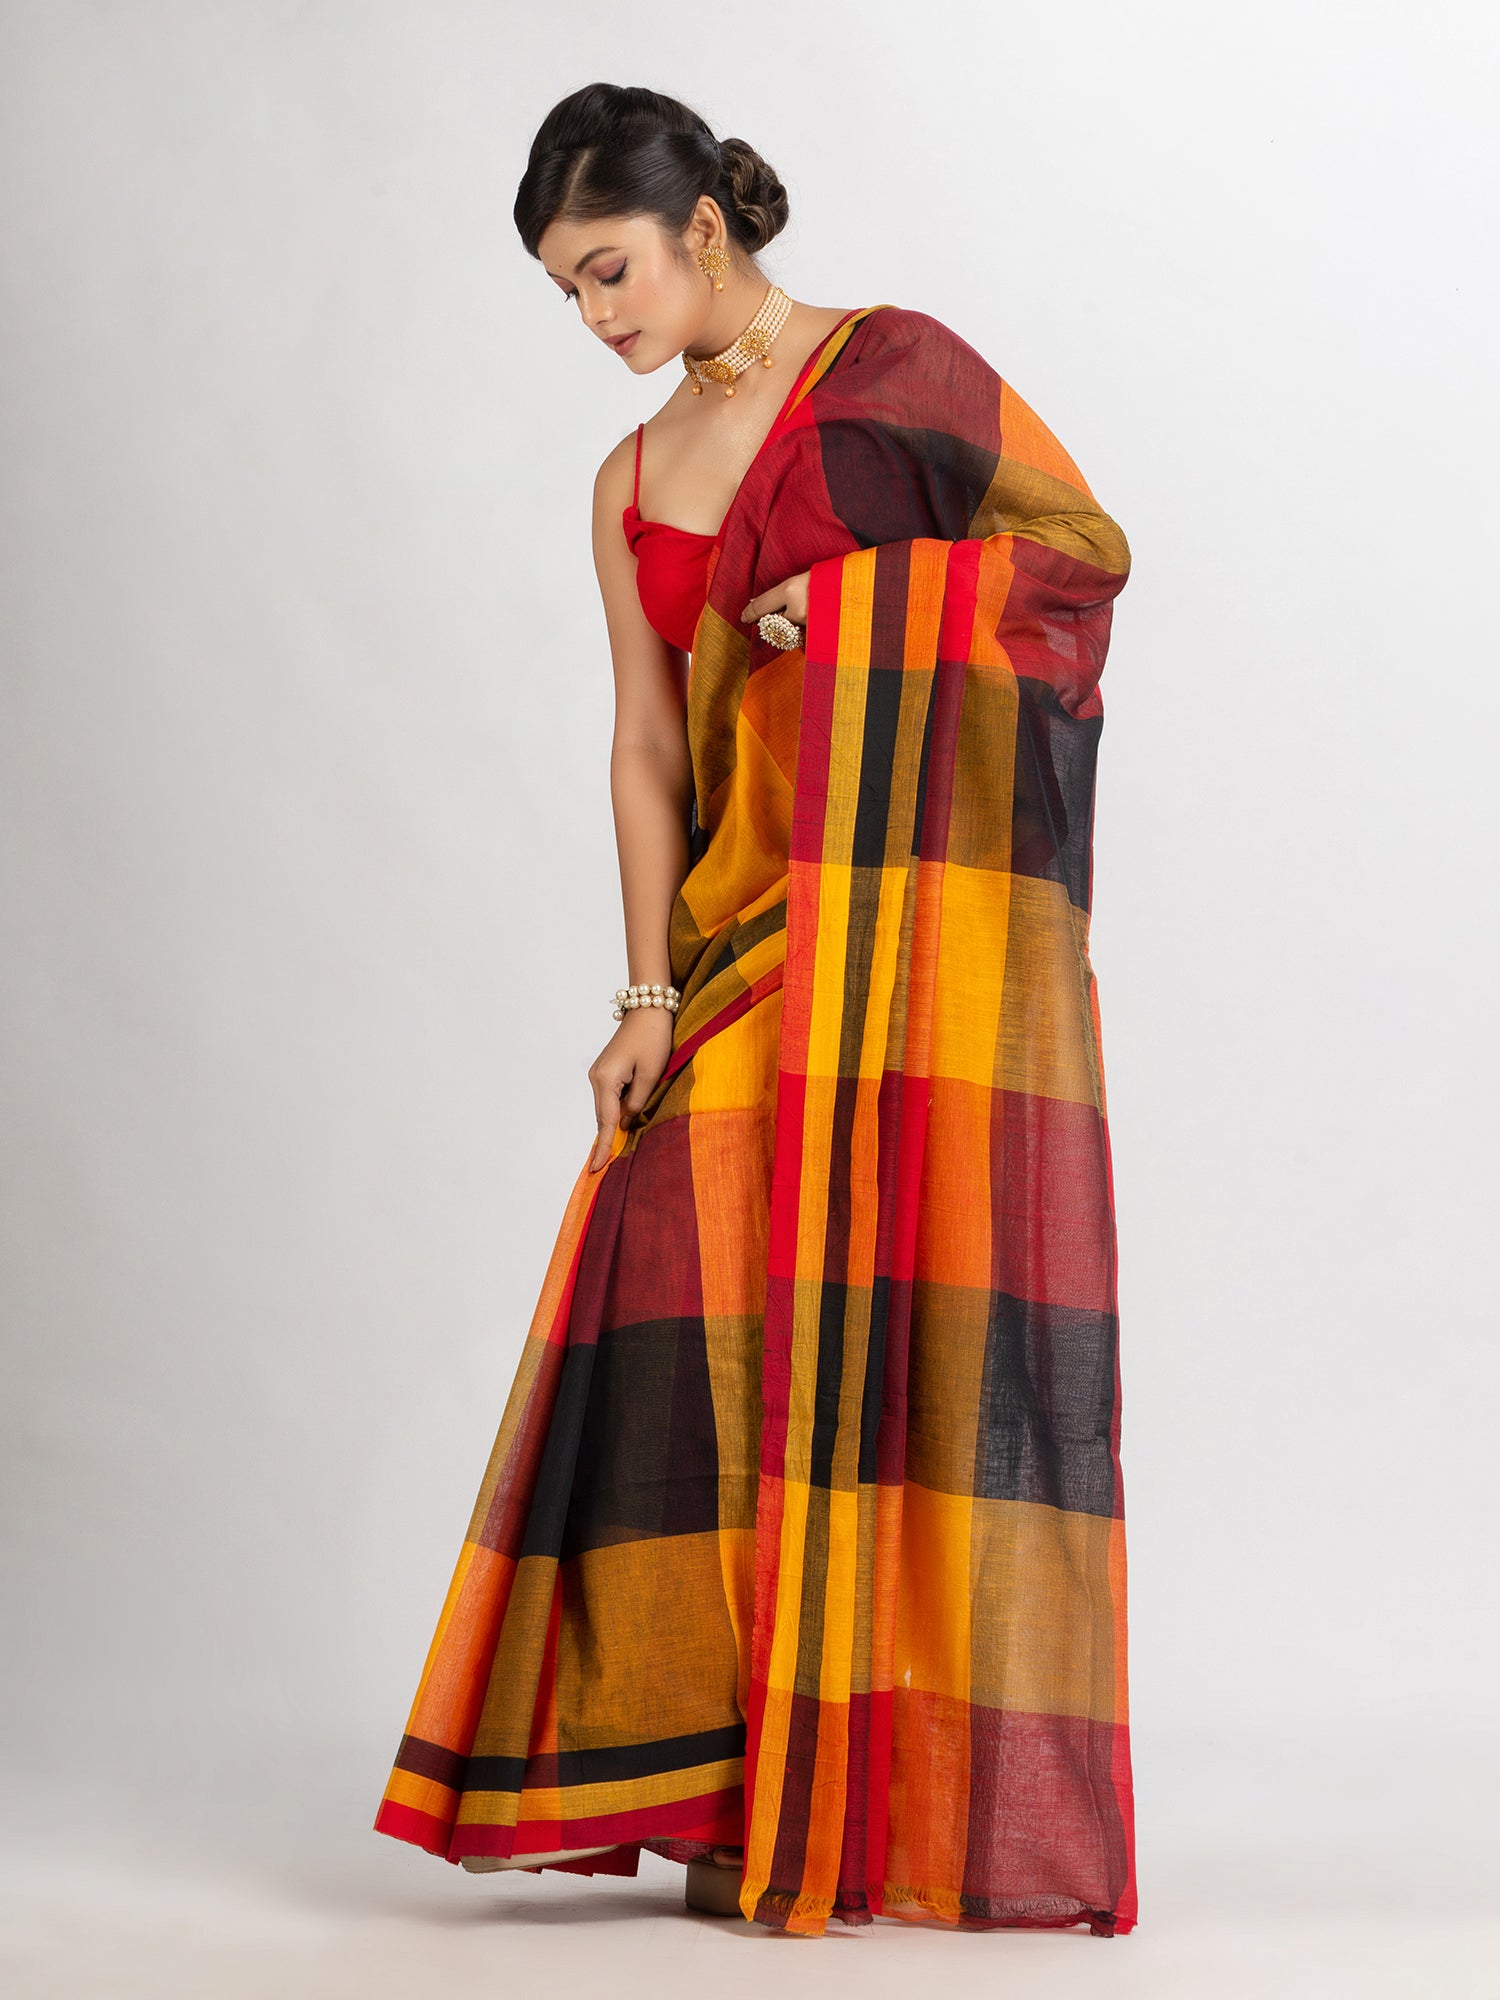 Women's Black Red And Yollow Multi Colour Check handloom Saree - Angoshobha